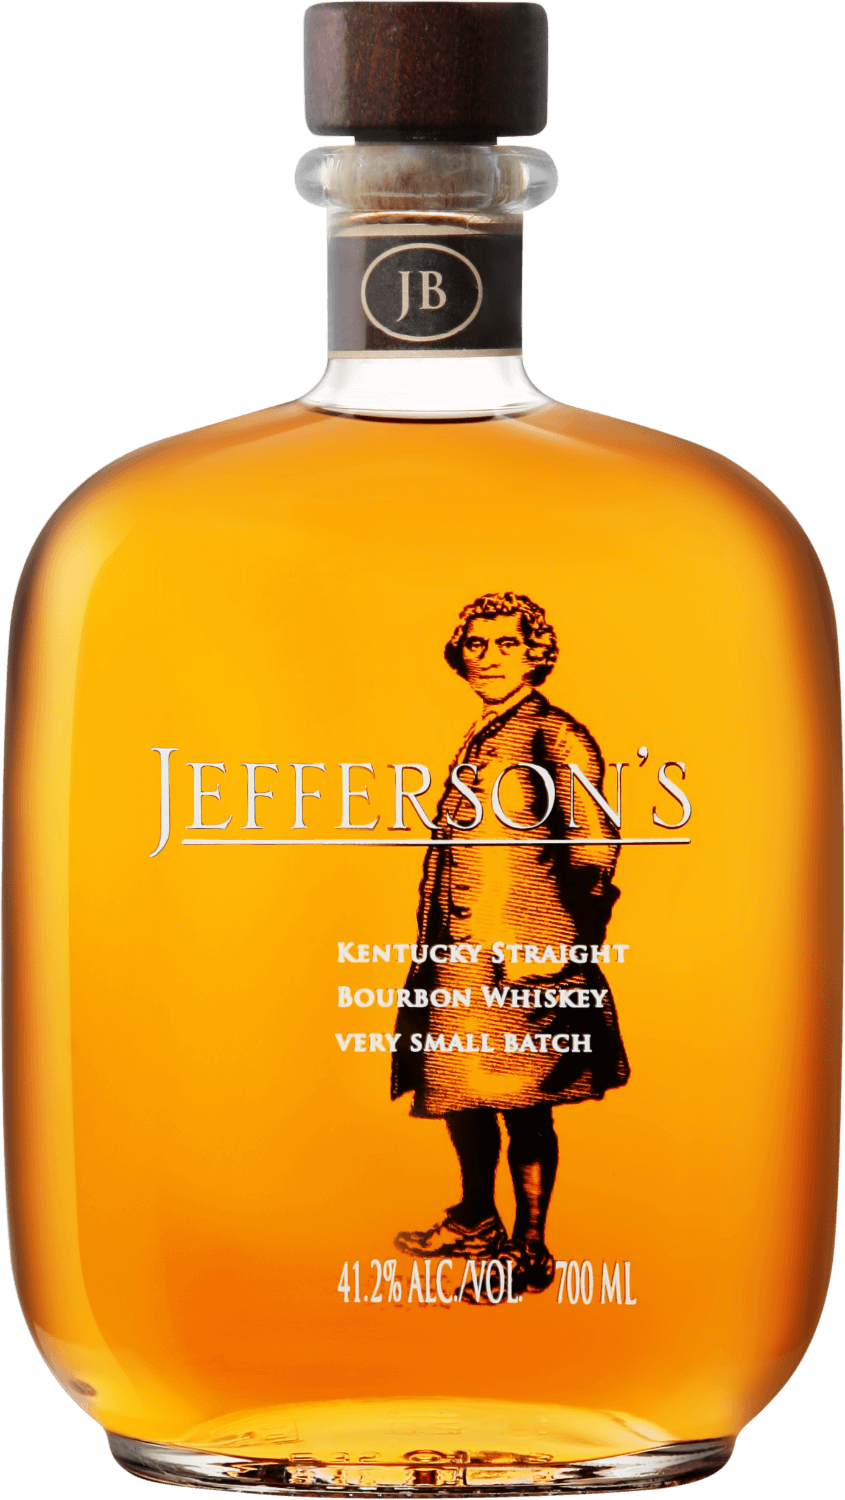 Jefferson’s Kentucky Straight Bourbon Whiskey jim beam kentucky straight bourbon whiskey